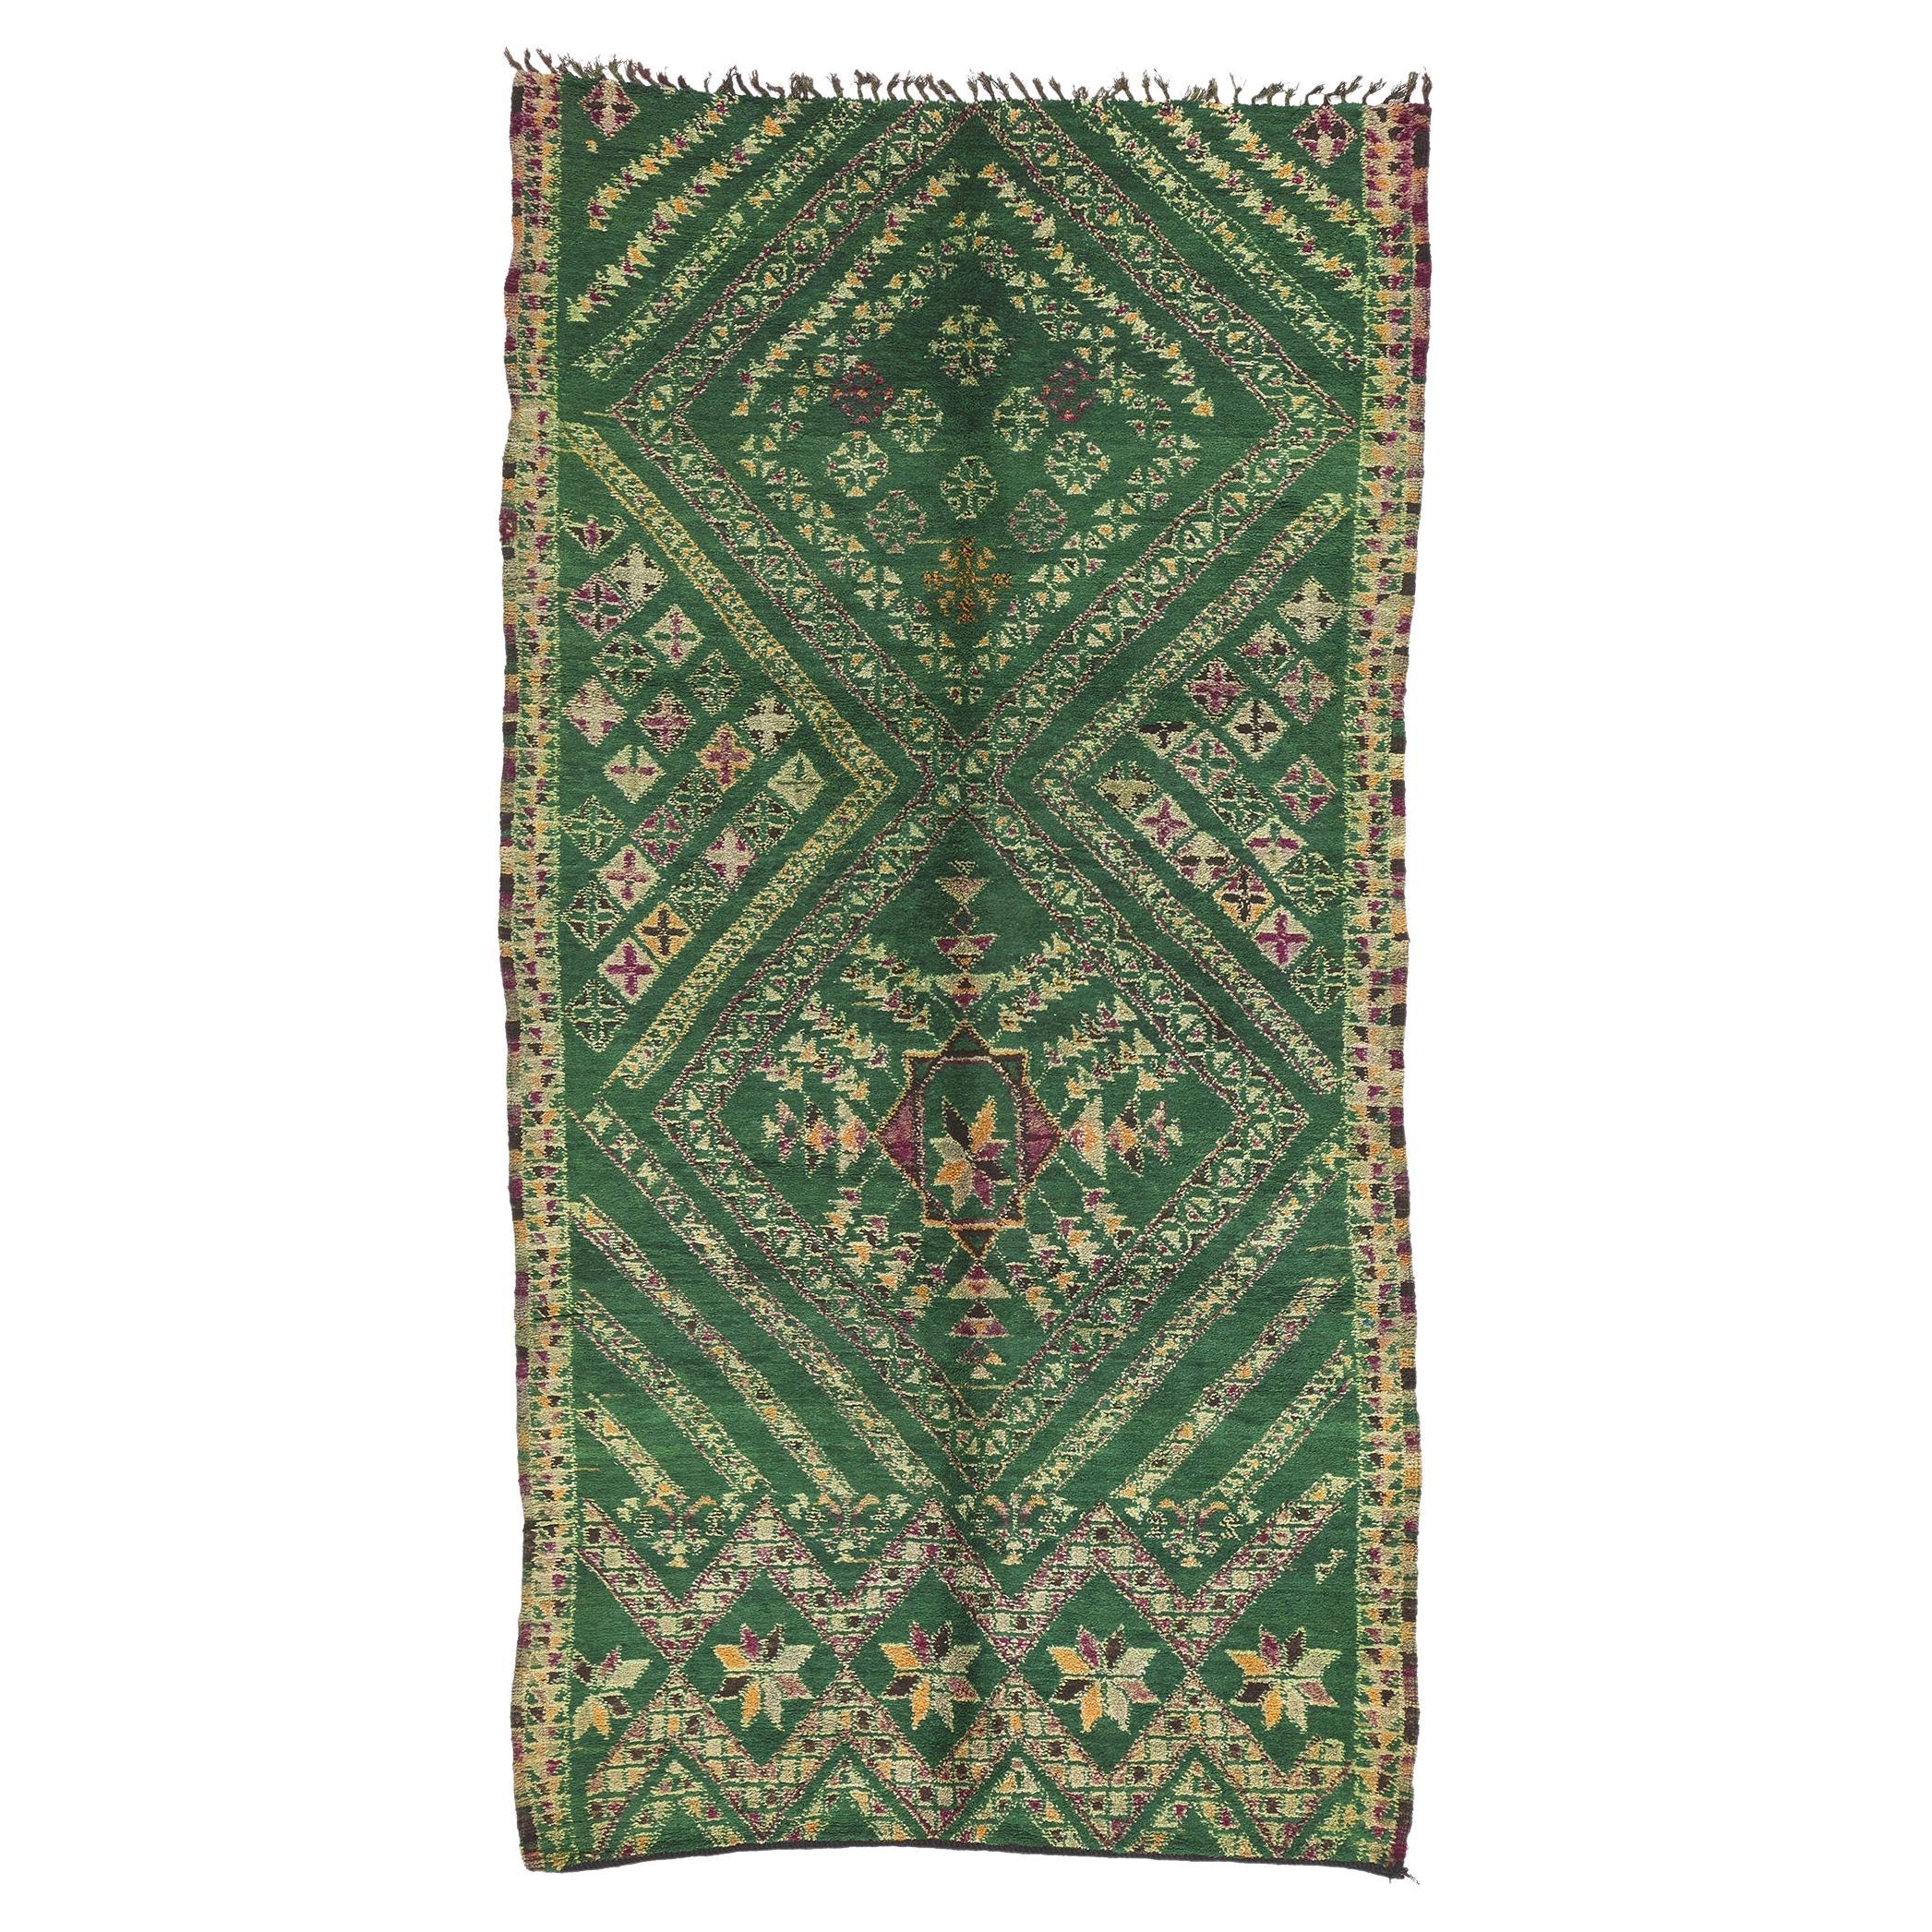 Vintage Green Beni MGuild Moroccan Rug, Biophilic Design Meets Tribal Allure